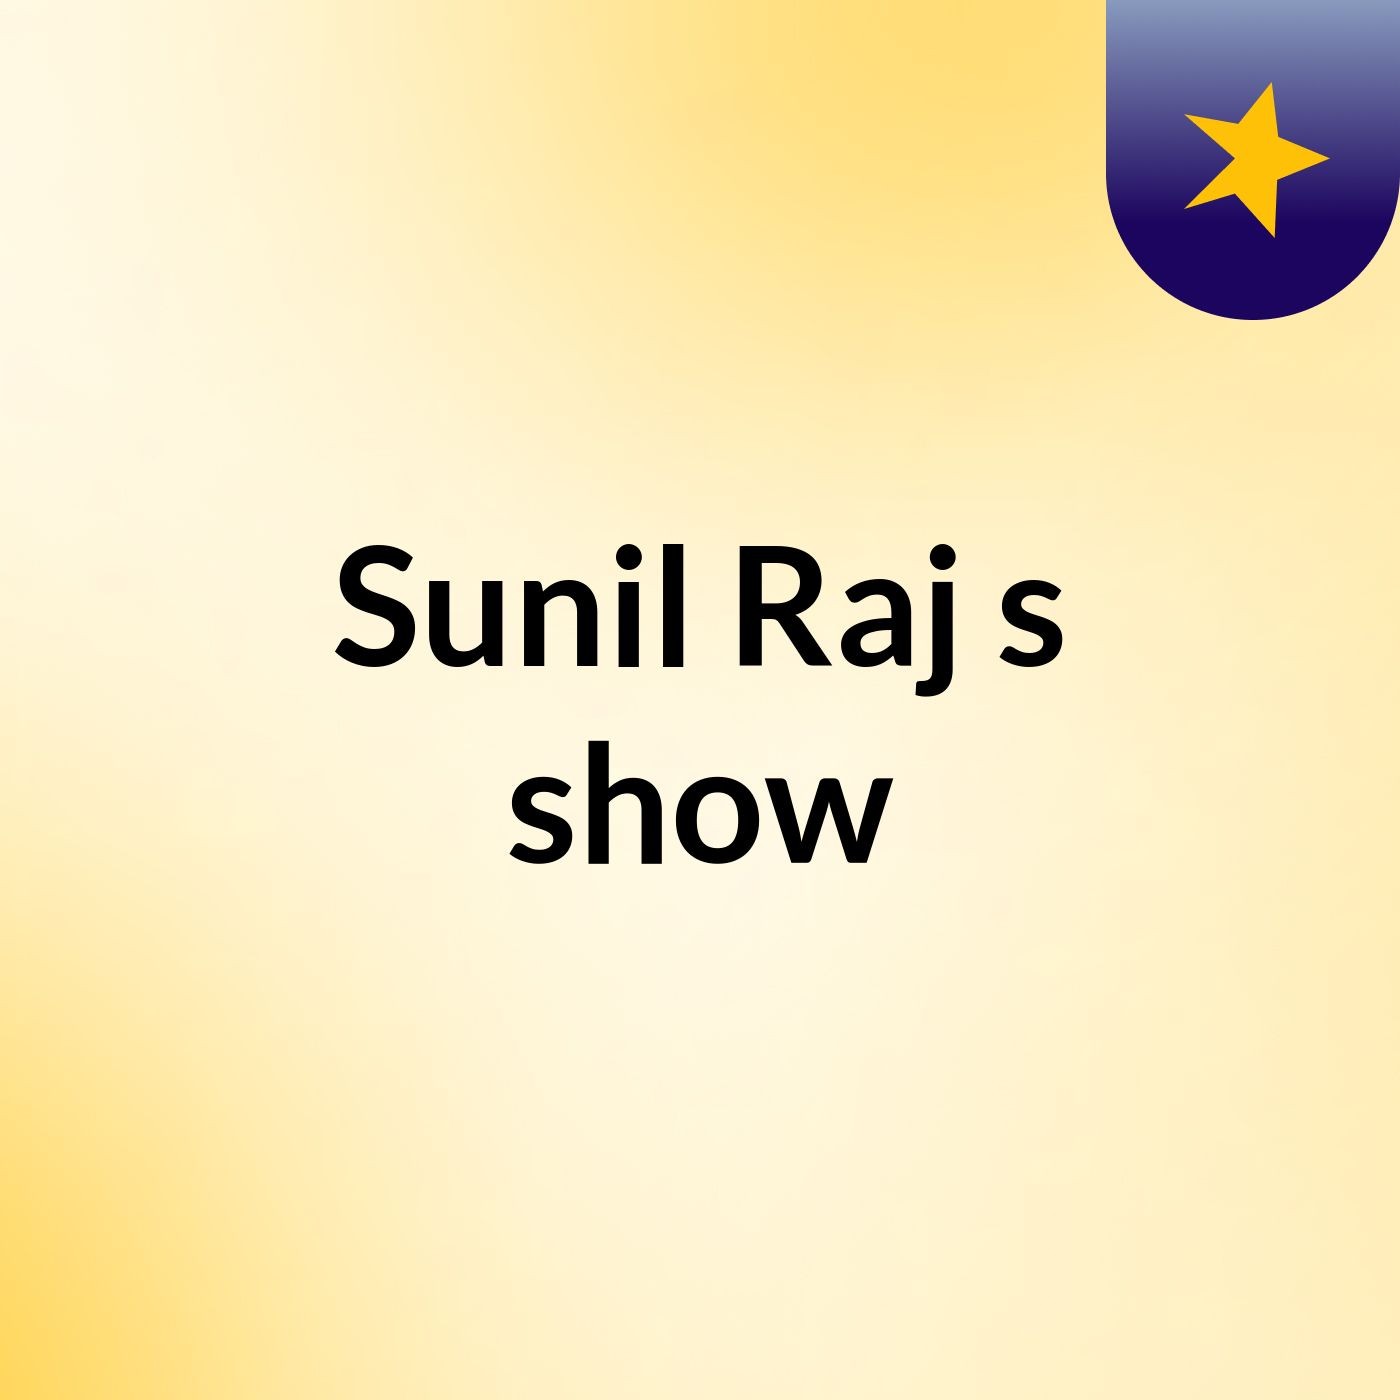 Sunil Raj's show